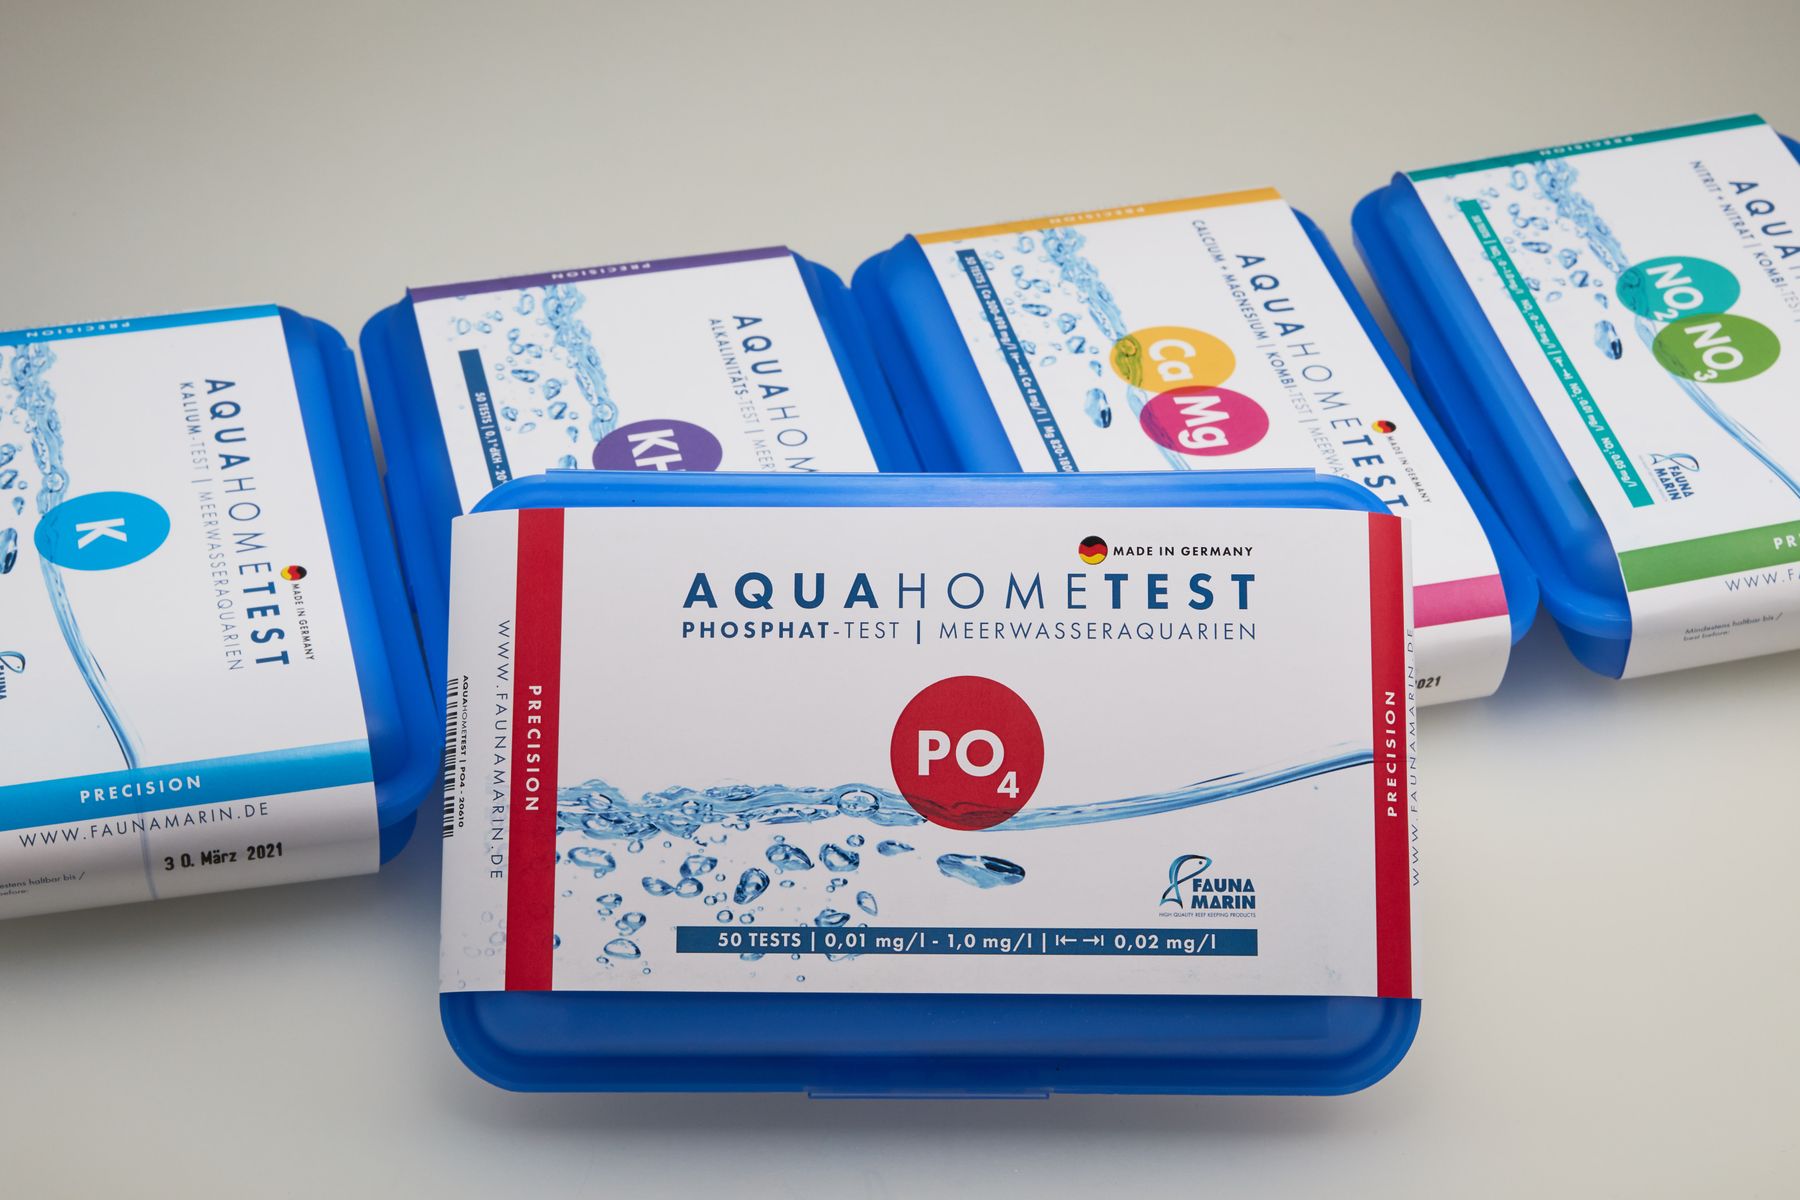 Fauna Marin AquaHomeTest PO4: Phosphat-Test für Meerwasseraquarien